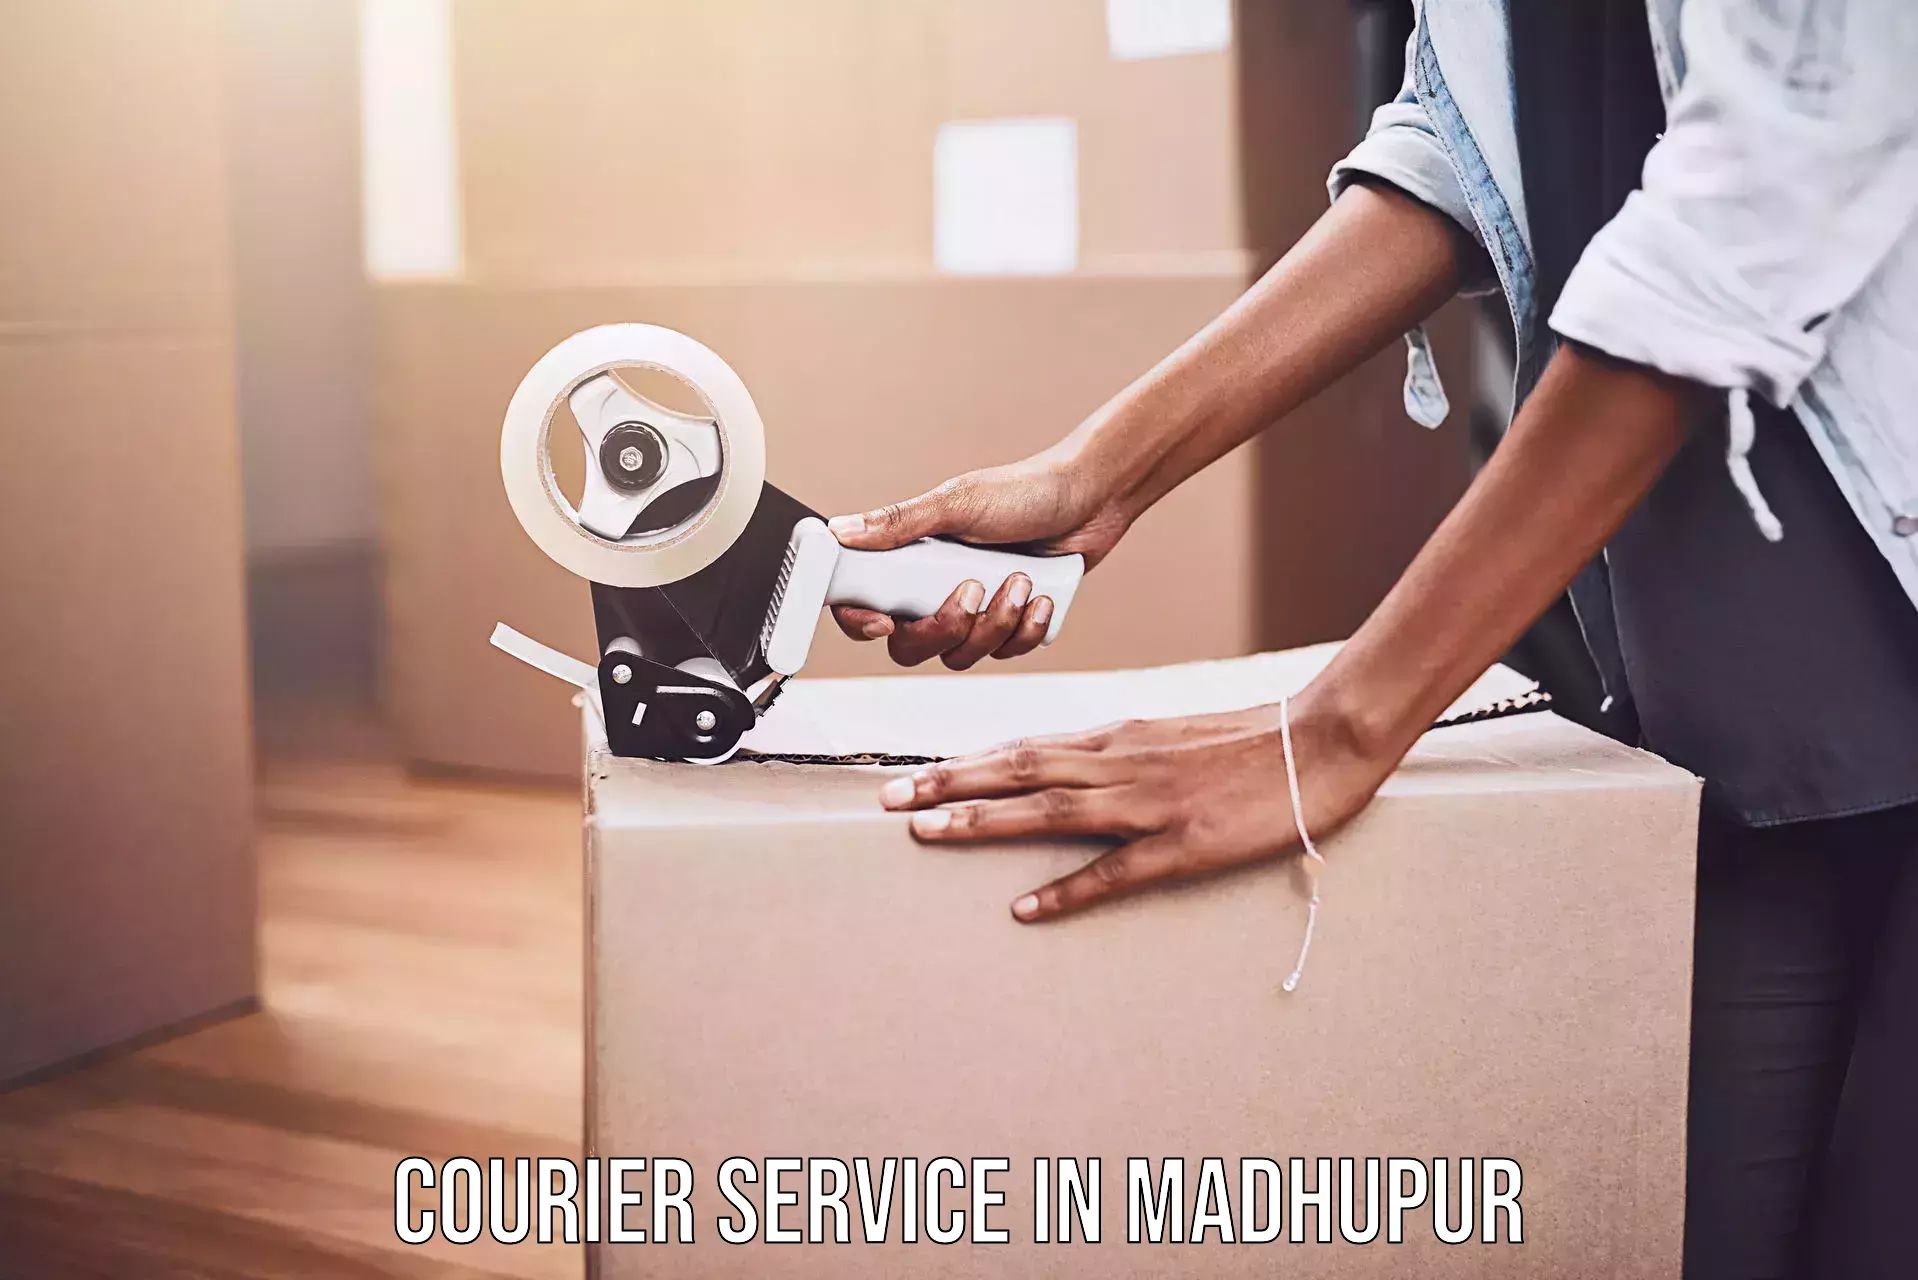 E-commerce fulfillment in Madhupur